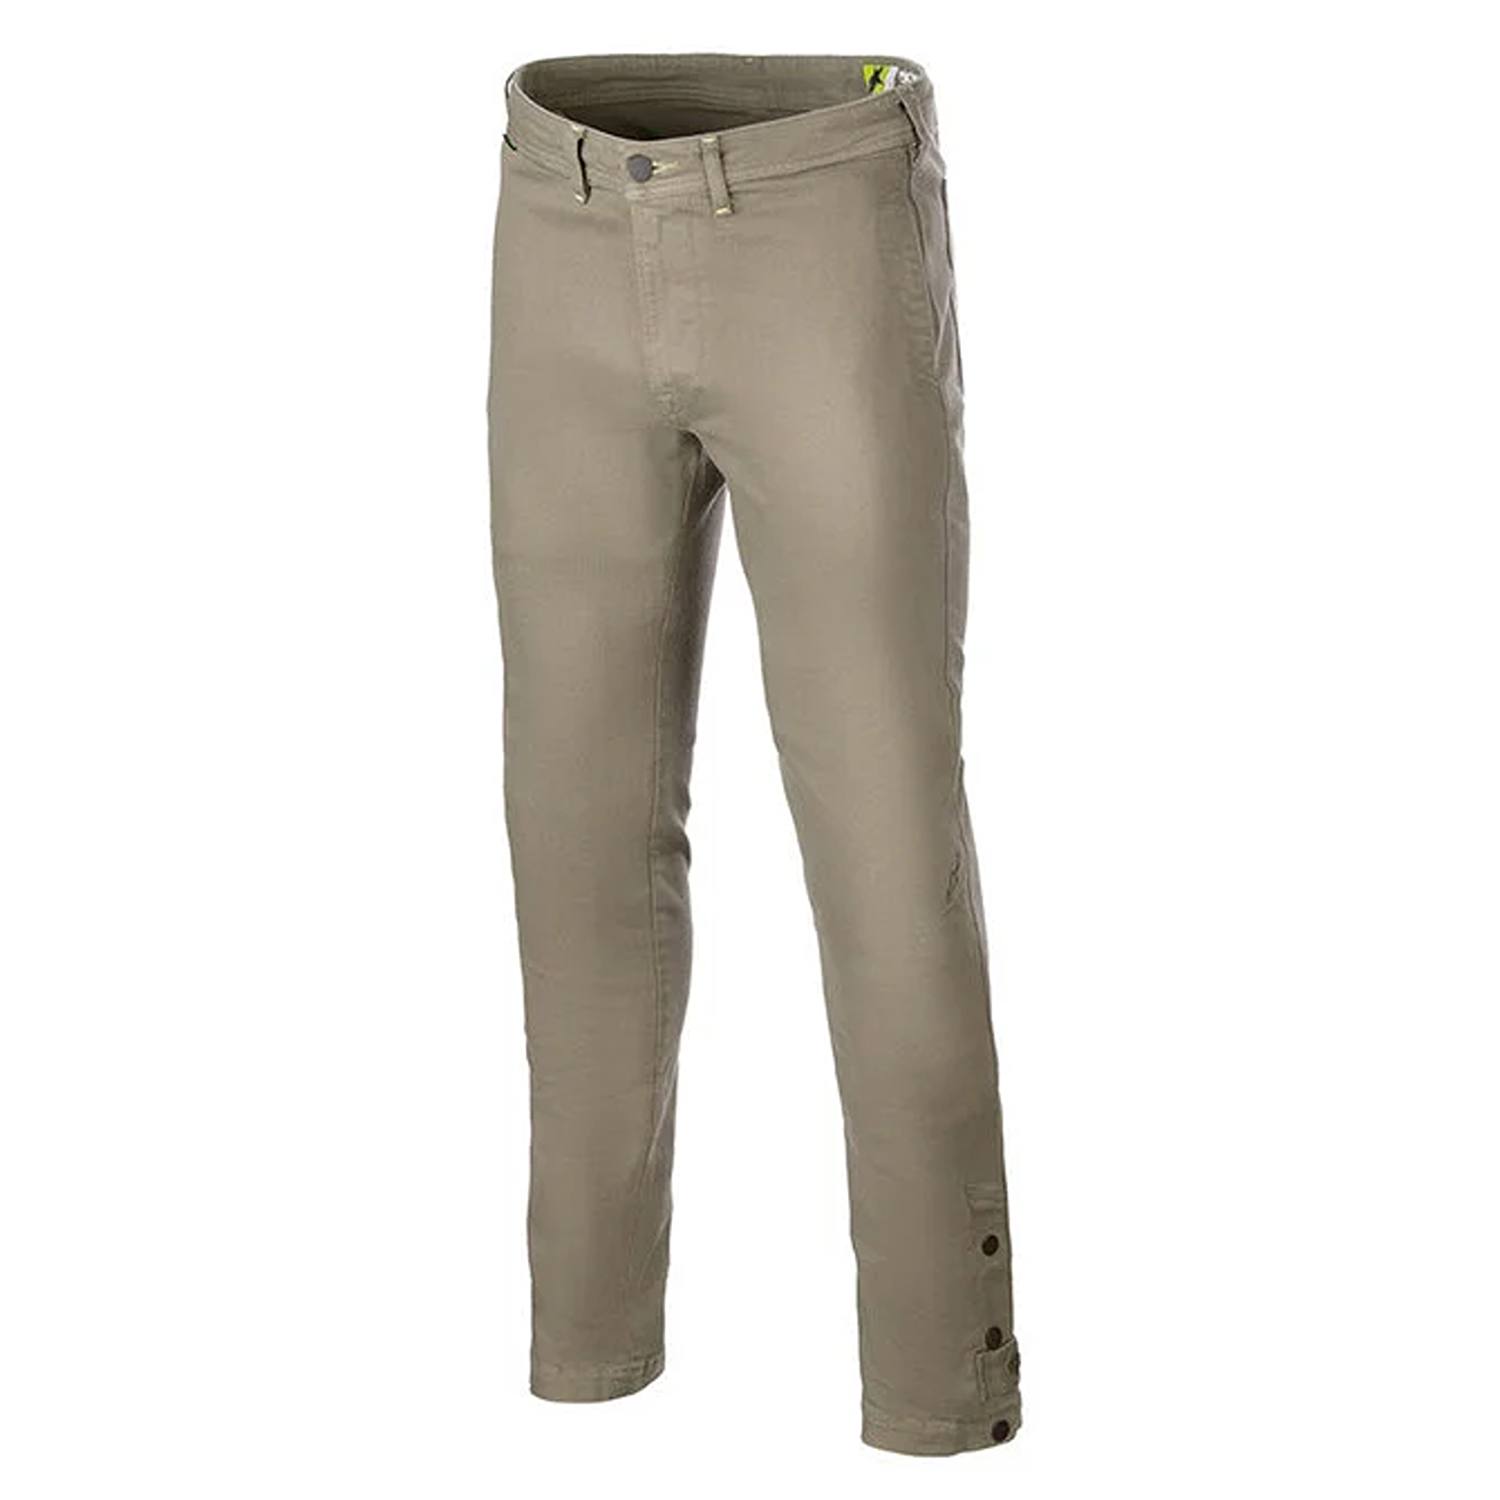 Image of Alpinestars Stratos Regular Fit Tech Riding Pants Military Green Size 31 ID 8059347165431